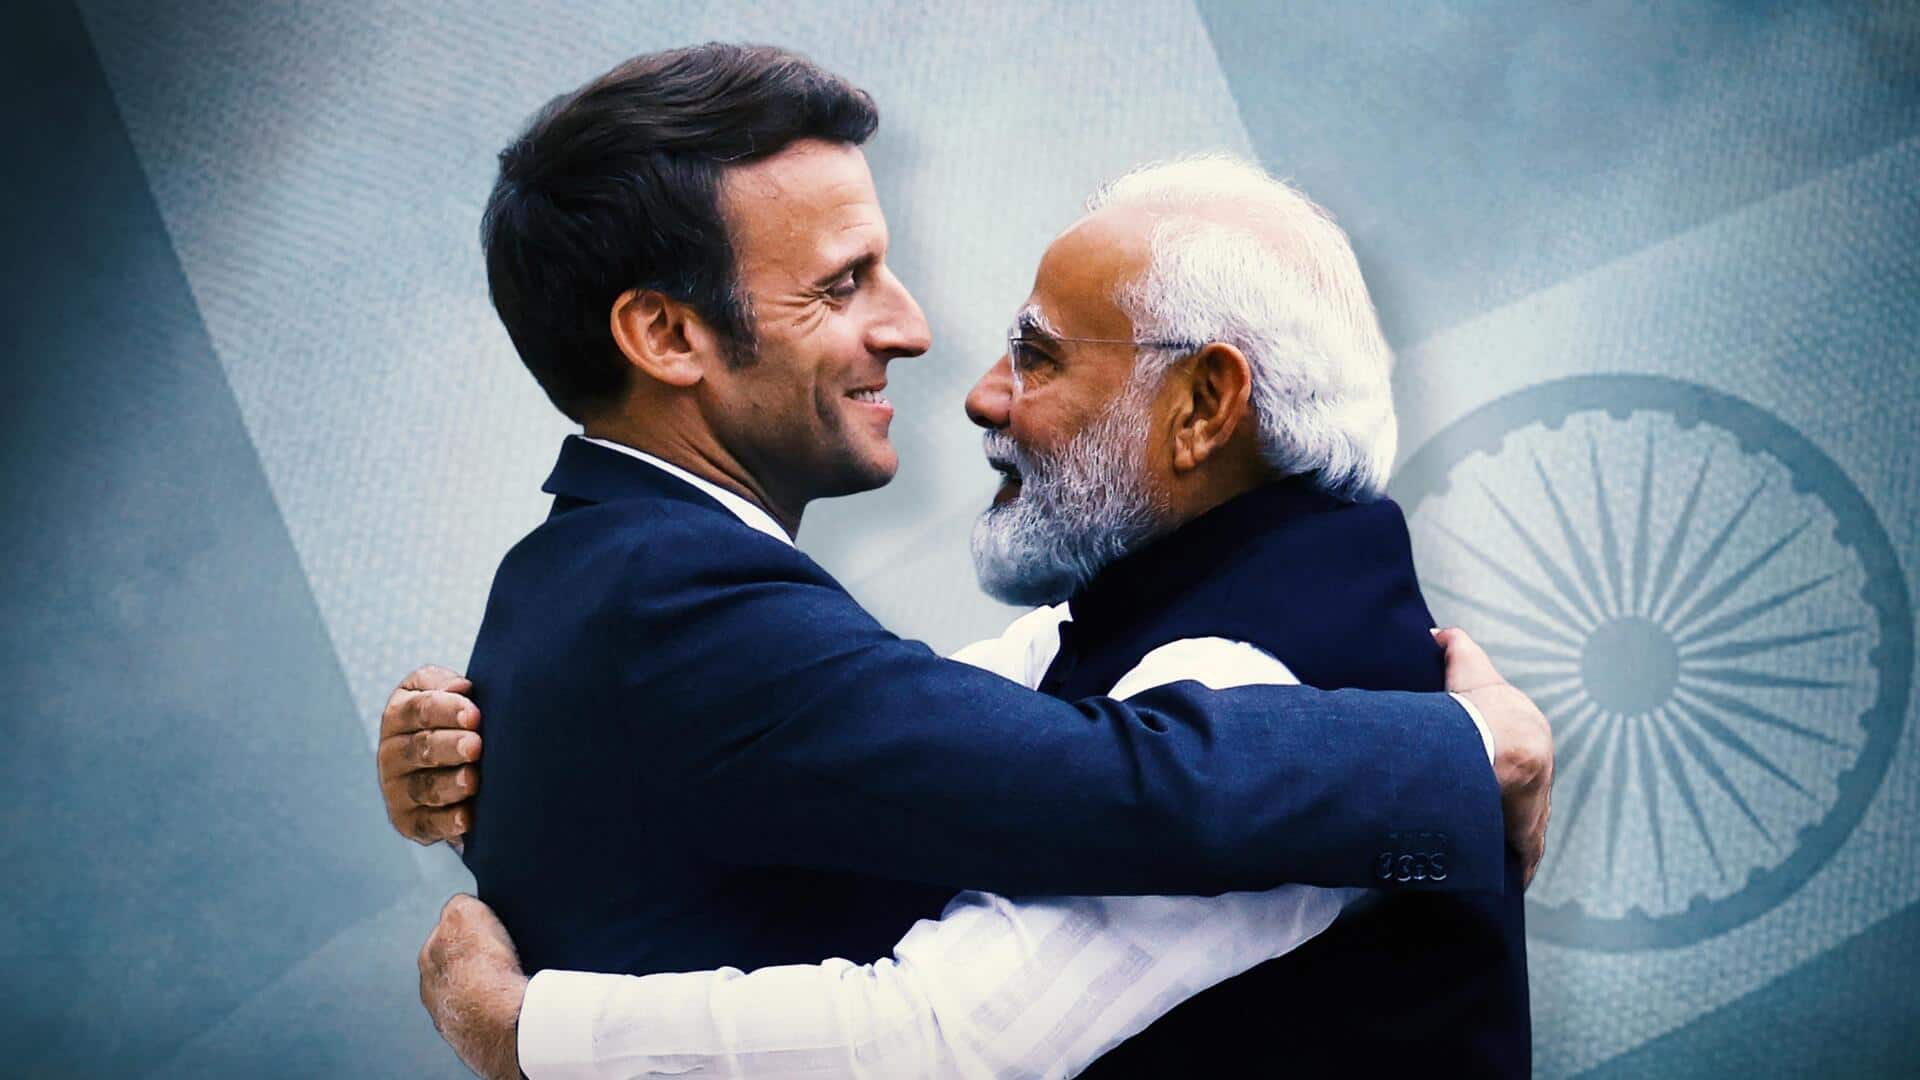 Jaipur roadshow, defense announcements: Highlights of Macron's India visit